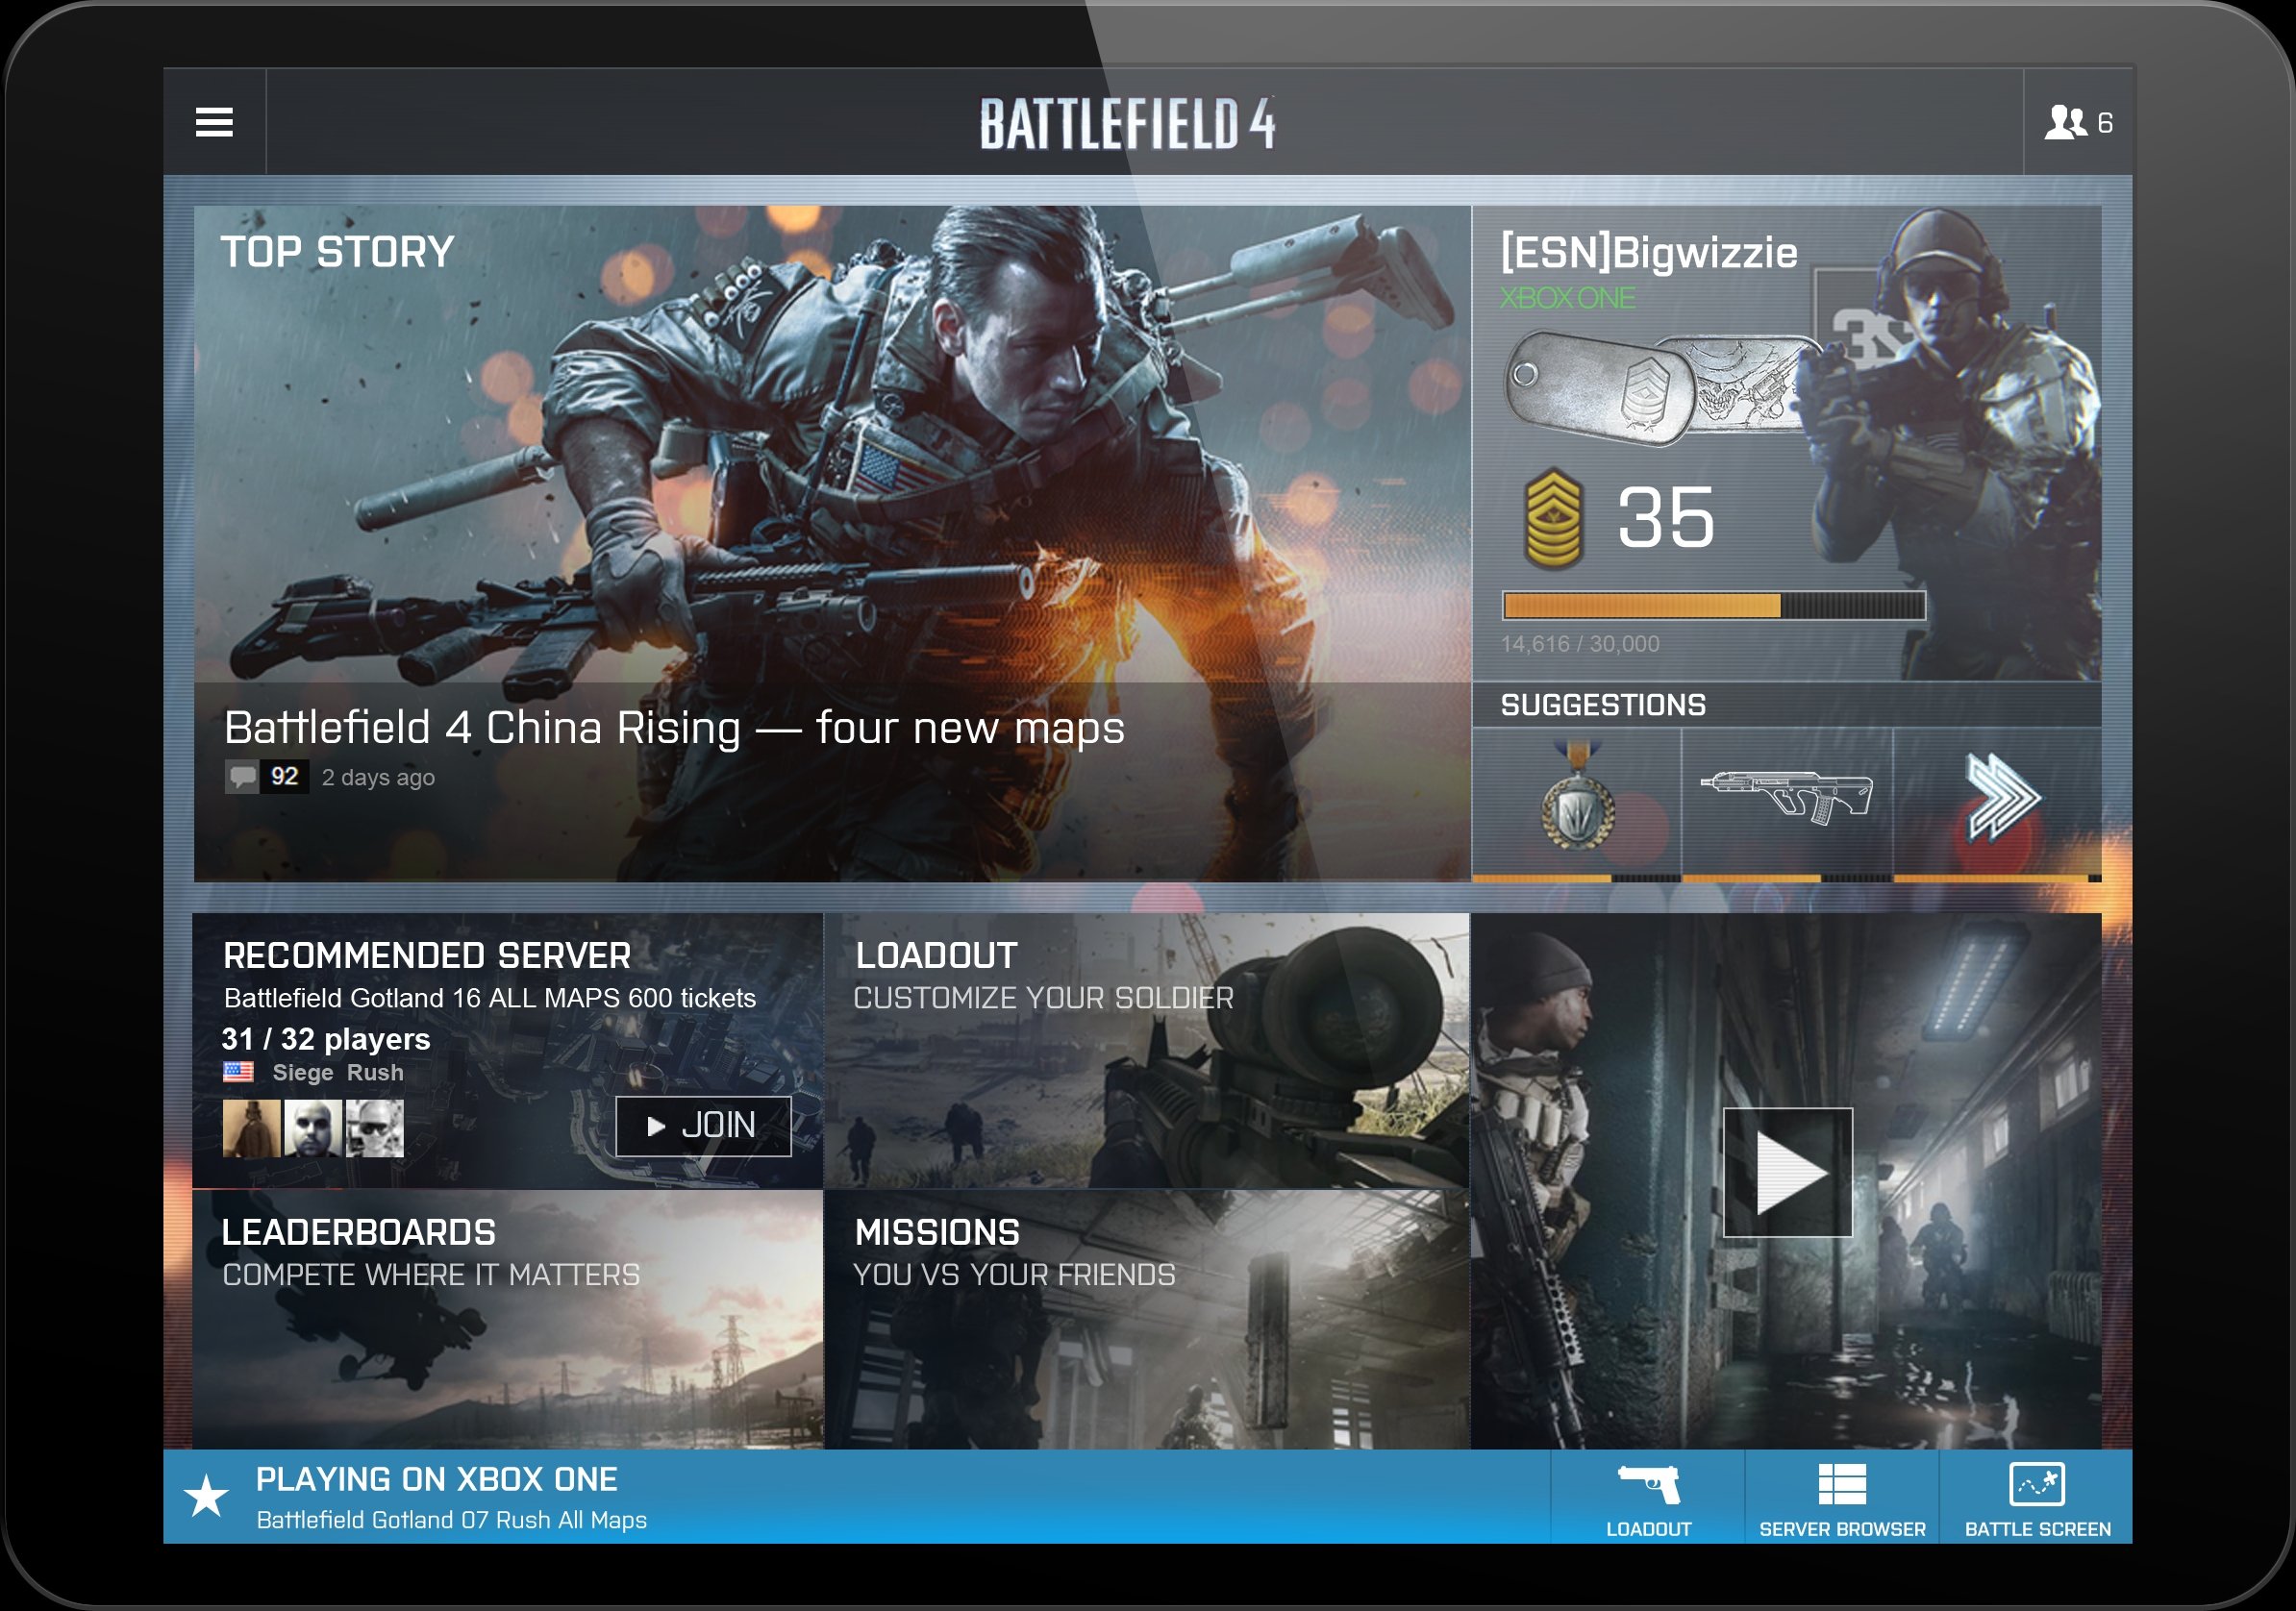 Battlelog 2.0 will put Battlefield 4 in your pocket, sez this trailer